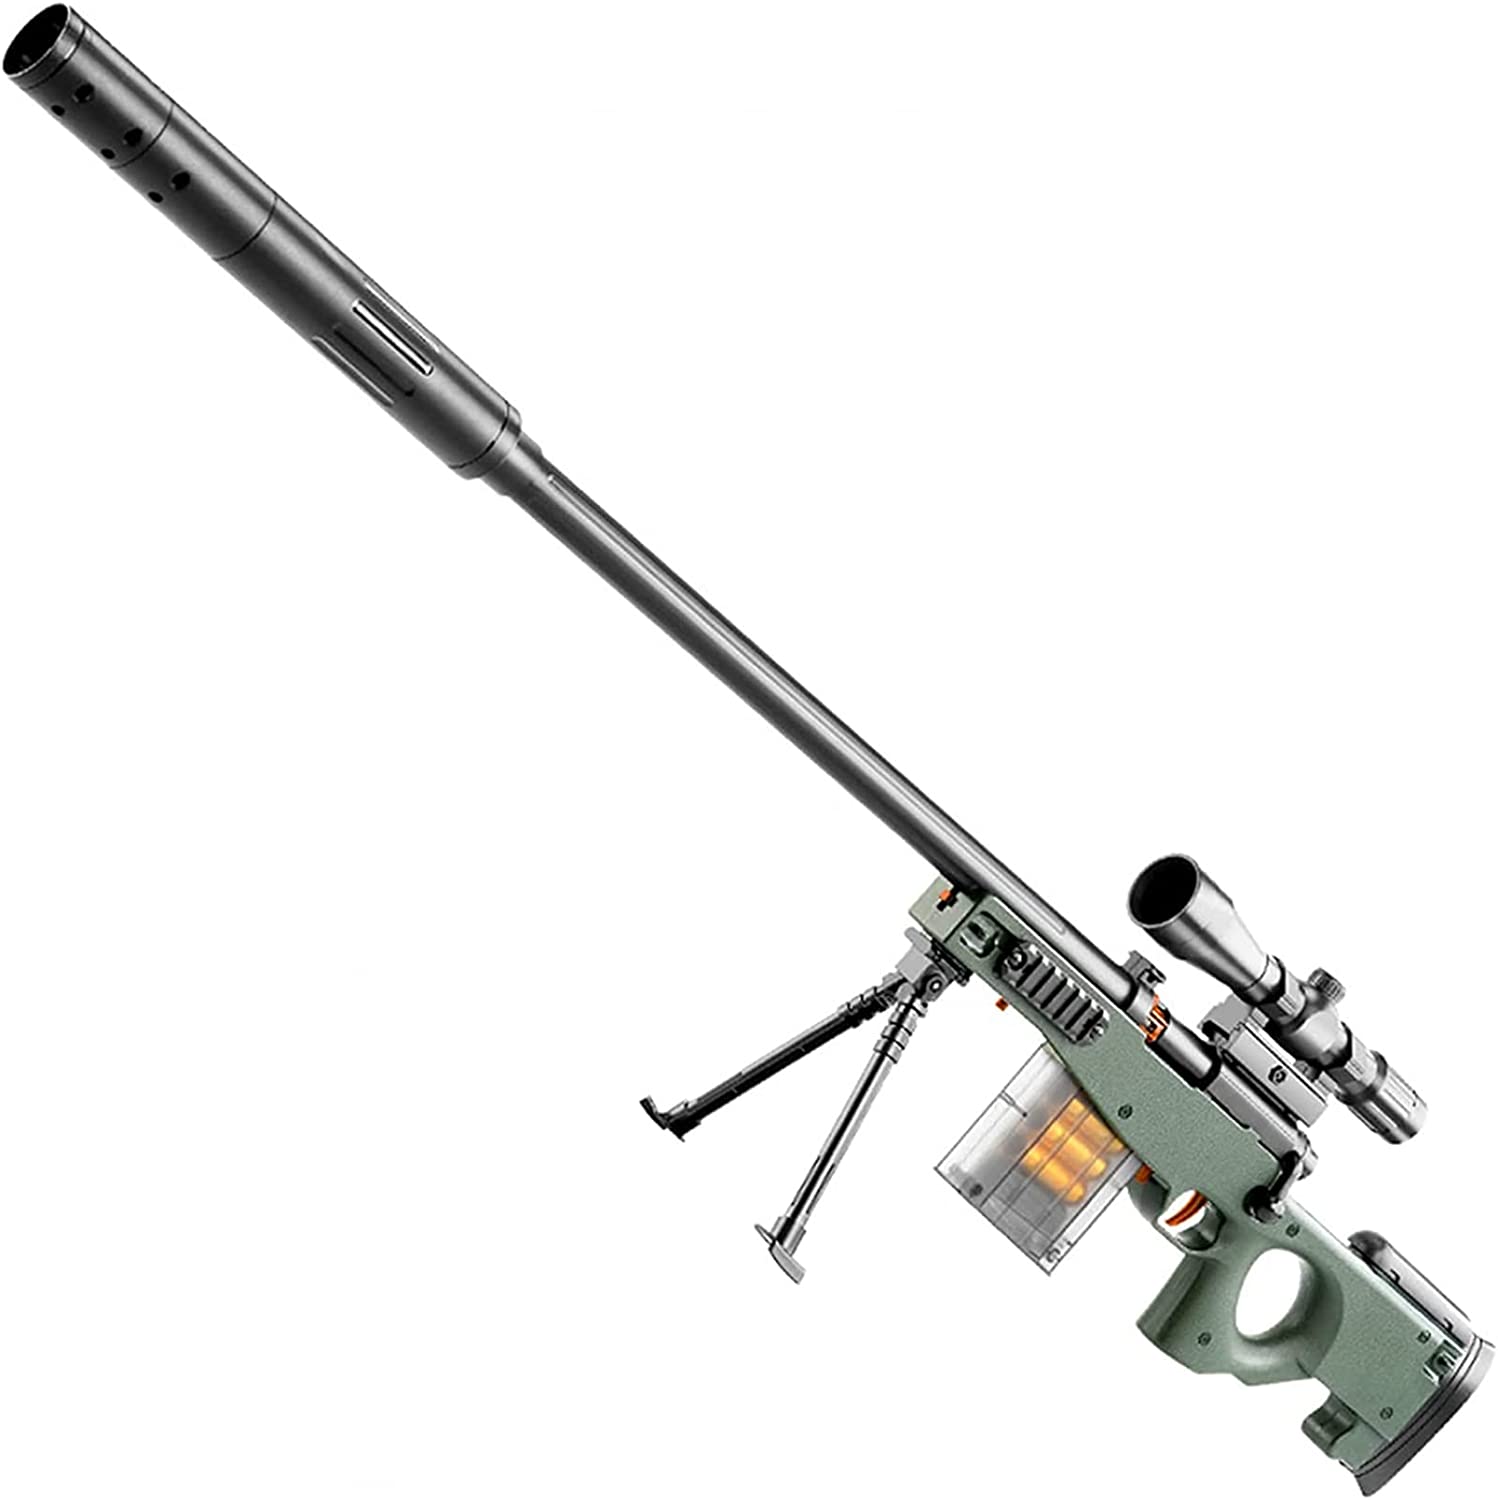 Sniper Rifle Crystal Bullet AWM Model Gun Toy Play Set Fun Toy